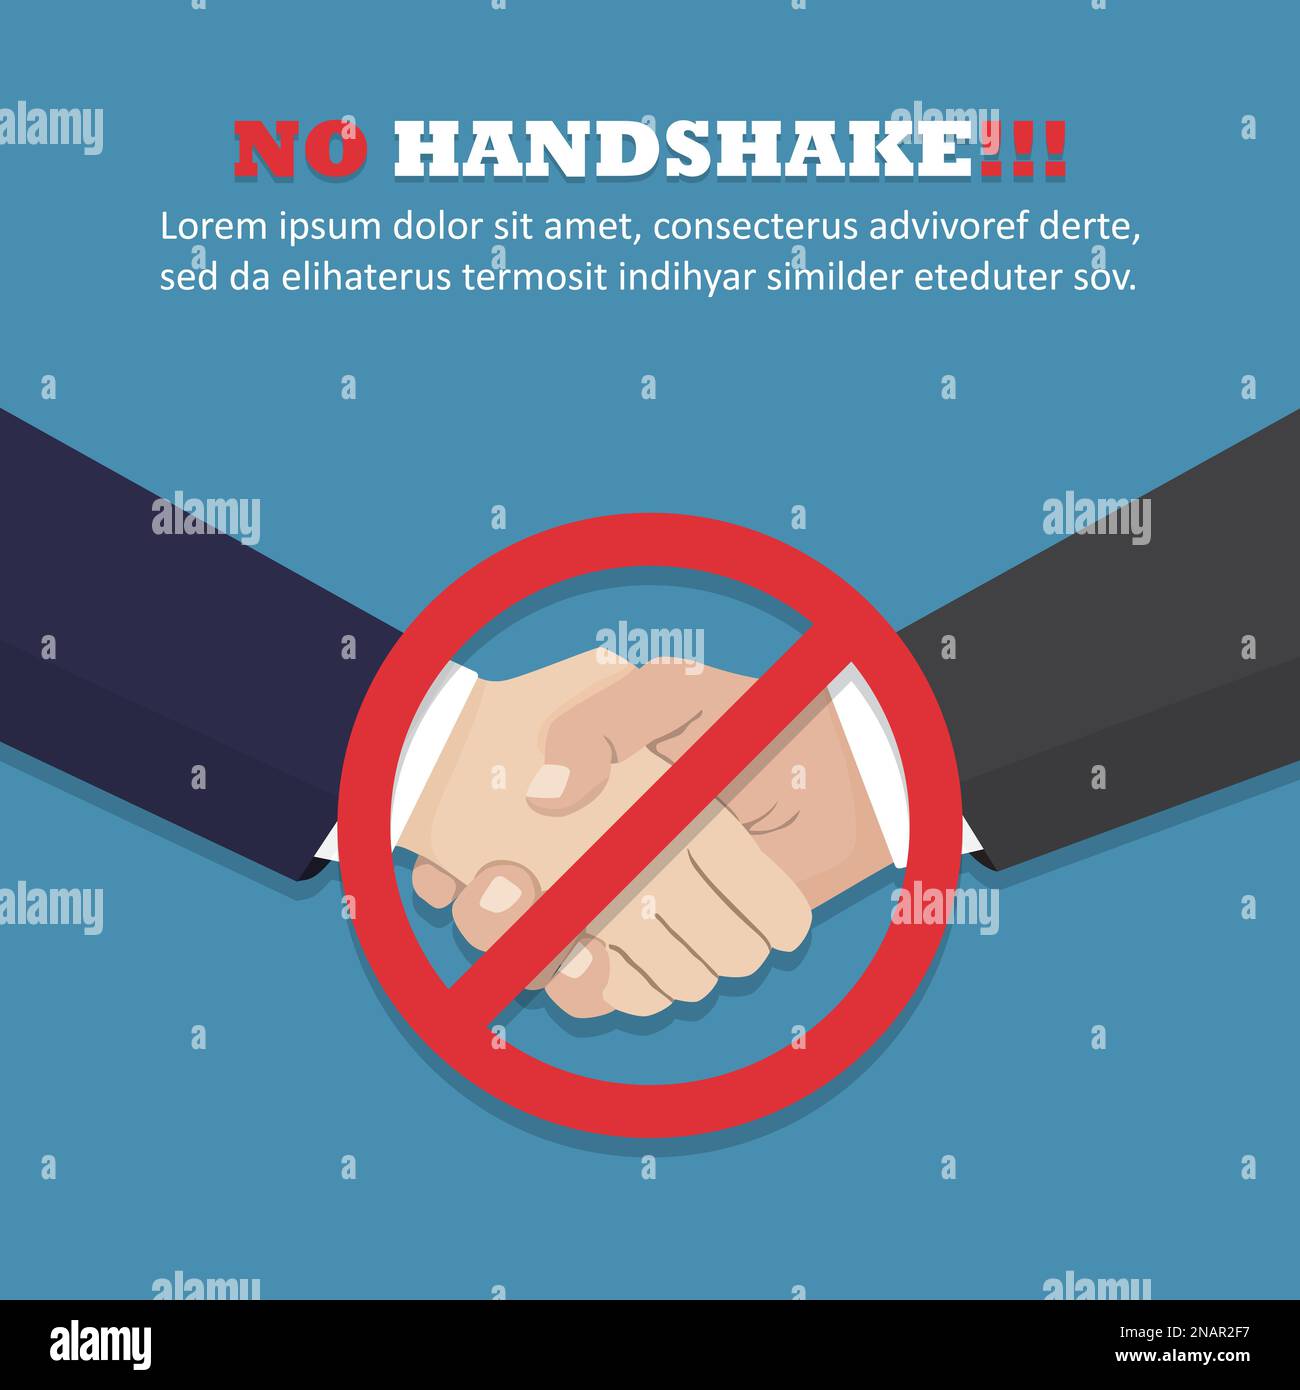 No handshake concept in a flat design. Vector illustration Stock Vector